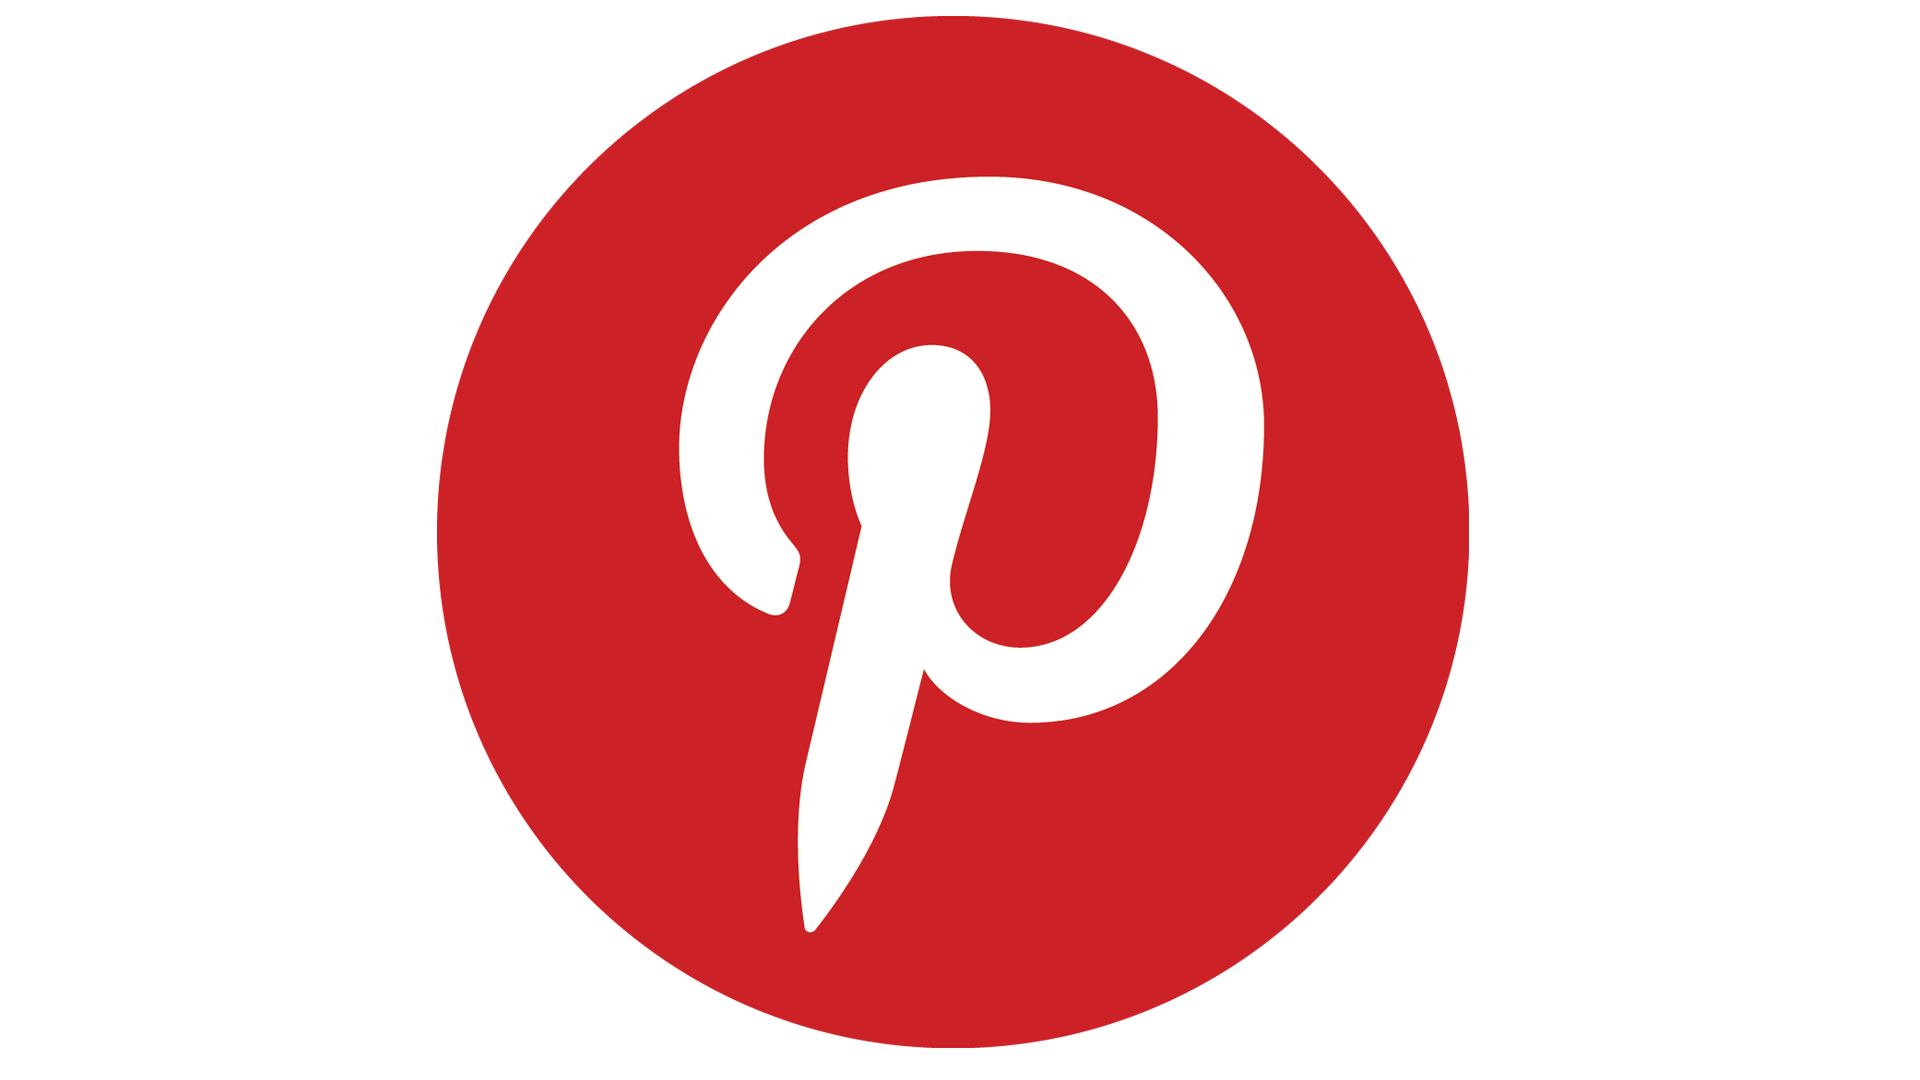 Adverteren op Pinterest | Pinterest advertentie campagne | PauwR